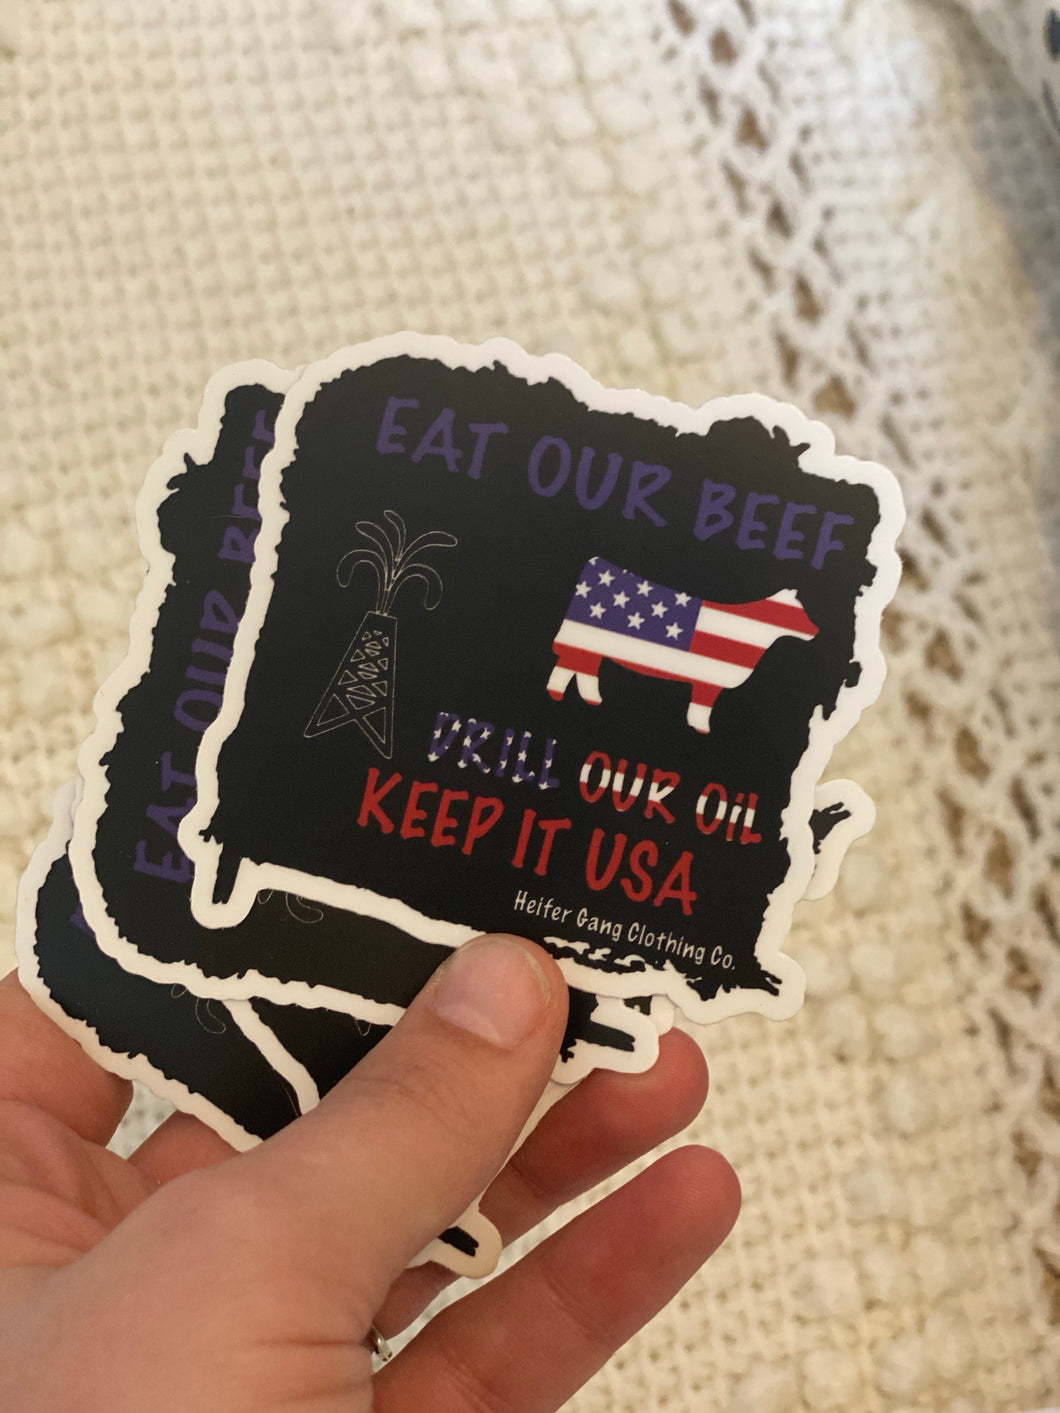 Keep it USA sticker.